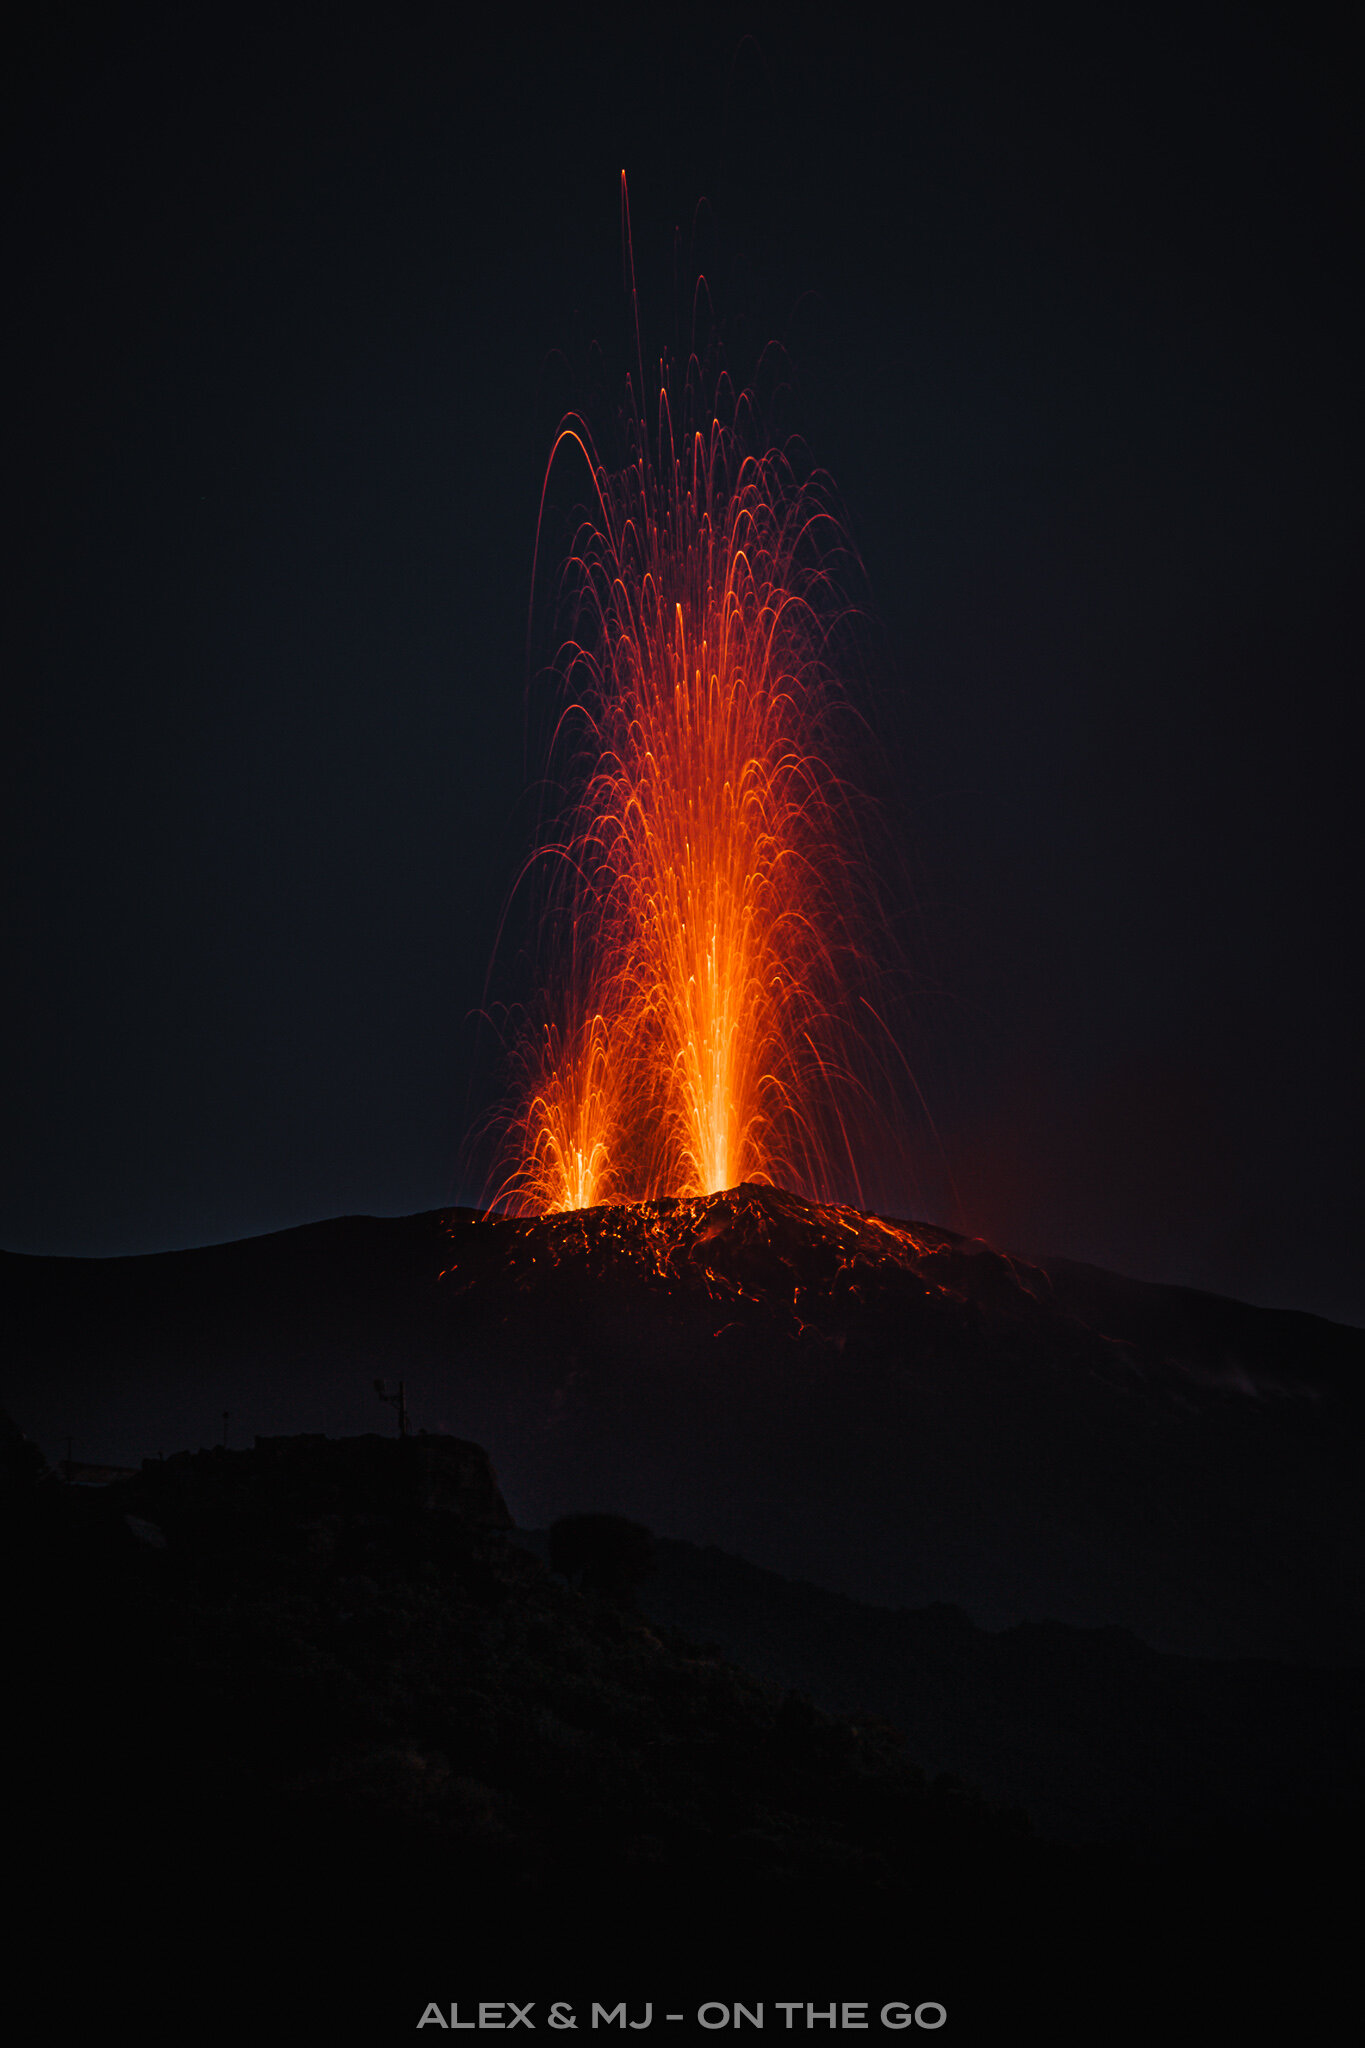 DSM0922810-27 Erruptions volcans_Alex-MJ-On-the-GO-Blogue_.jpg